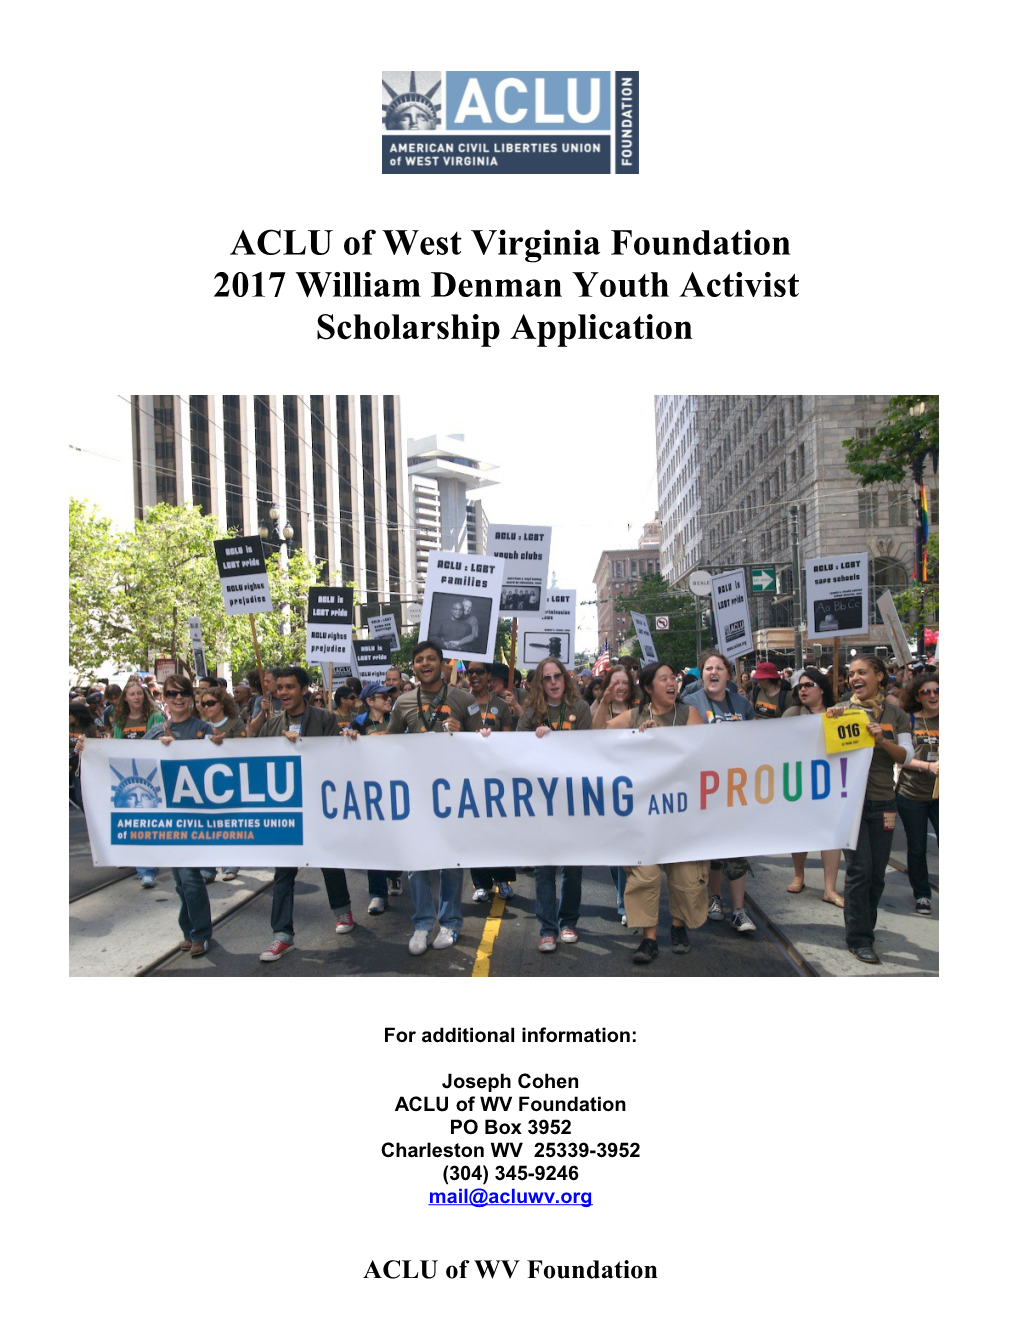 ACLU Student Activist Scholarship Program 2009: Application Forms